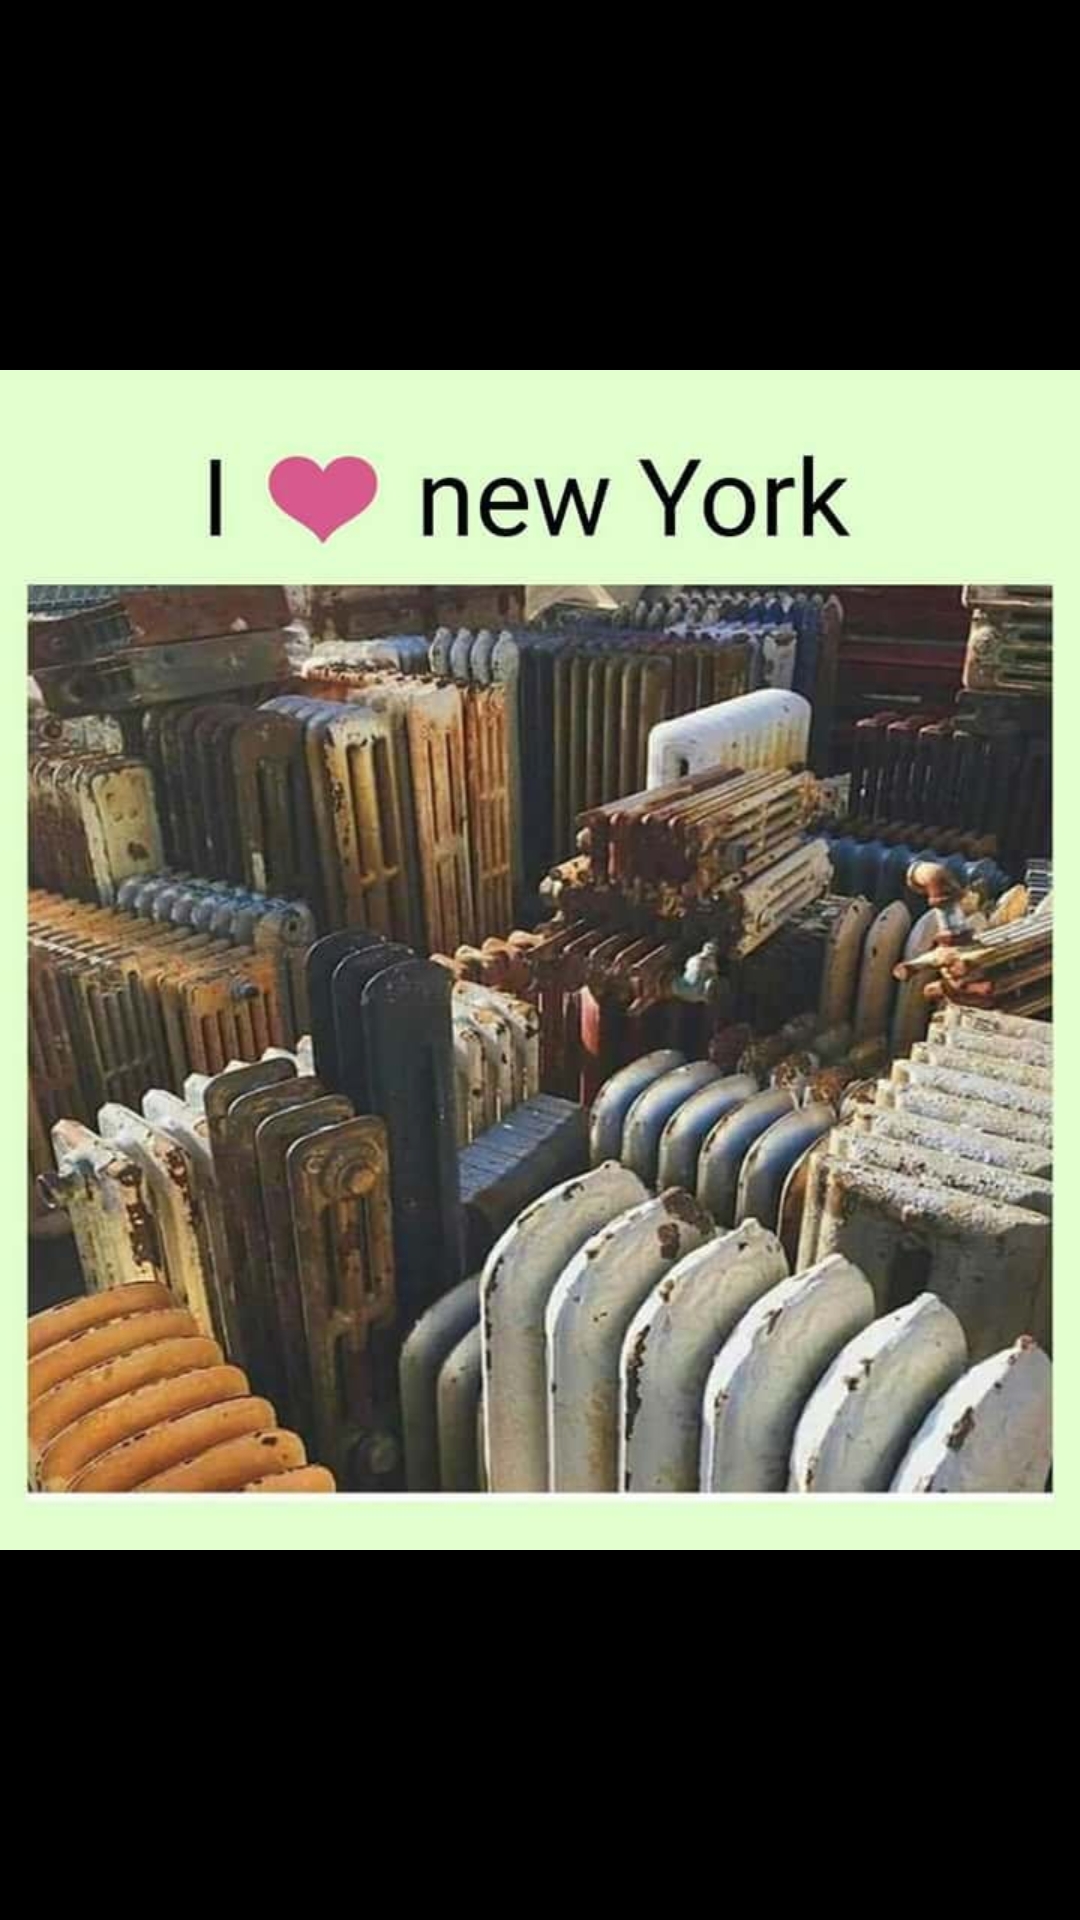 My heart belongs to NYC <3